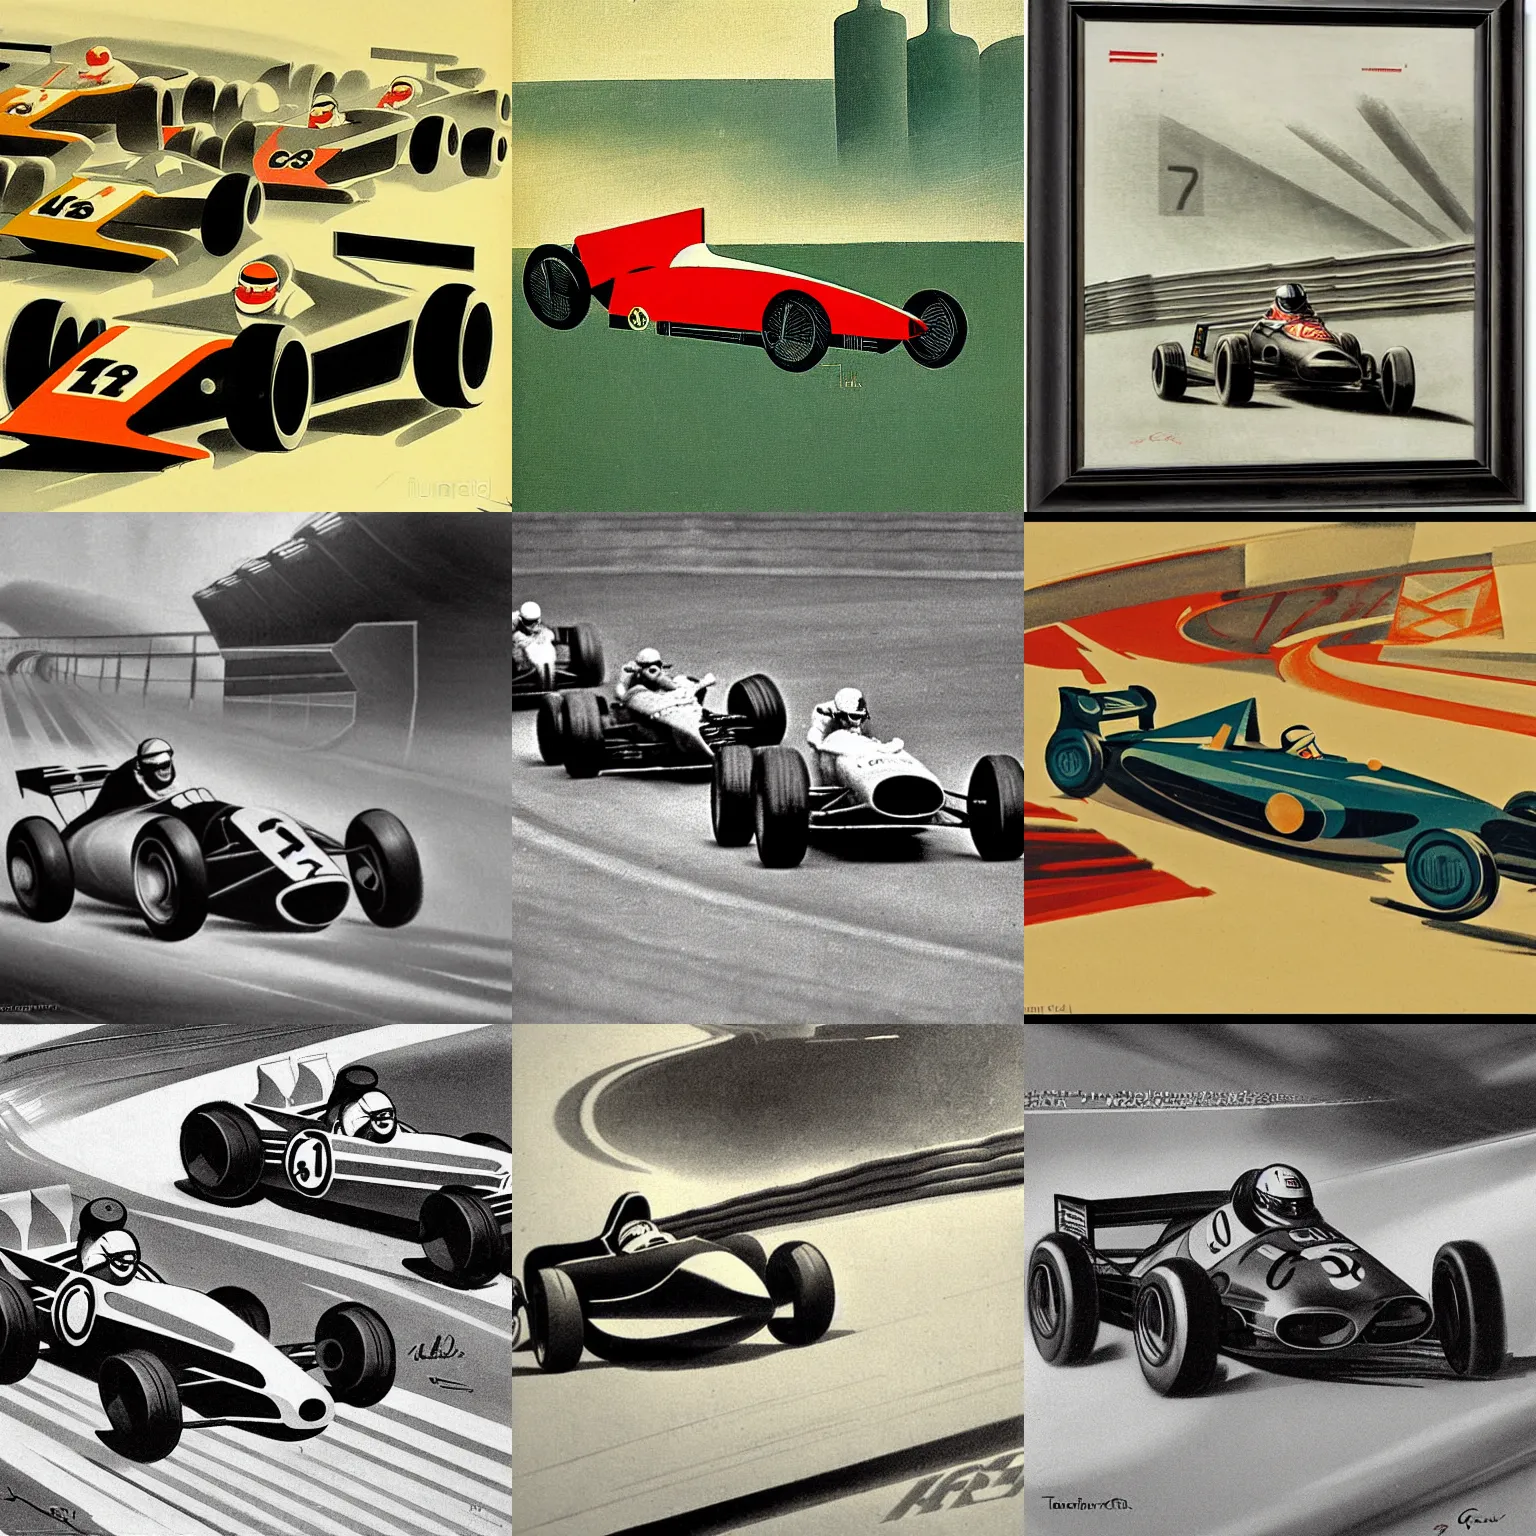 Prompt: Formula 1 race by Tullio Crali